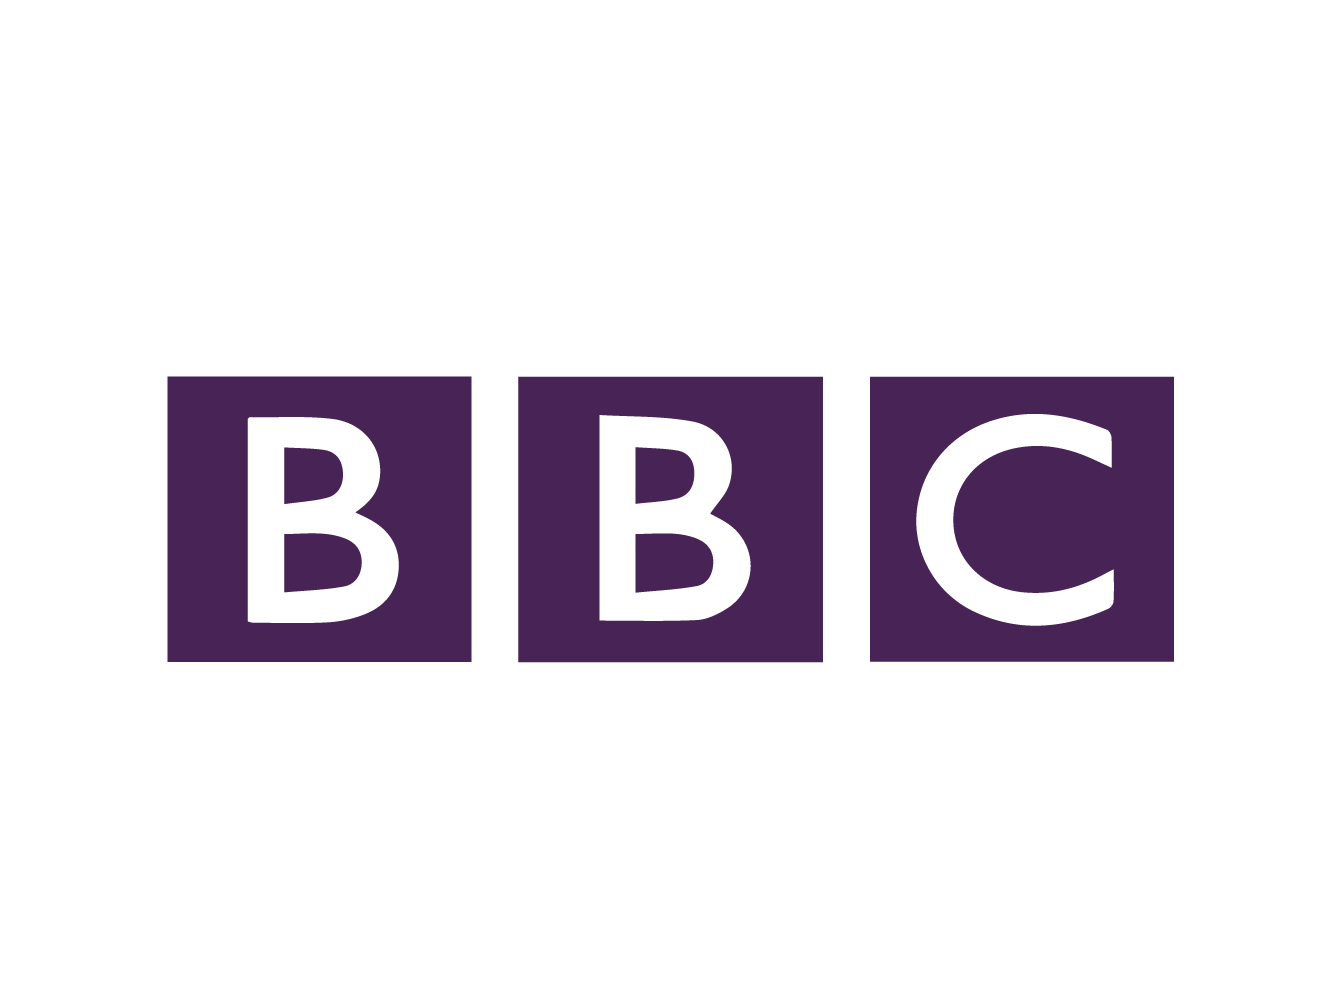 logos_workshops-bbc.png